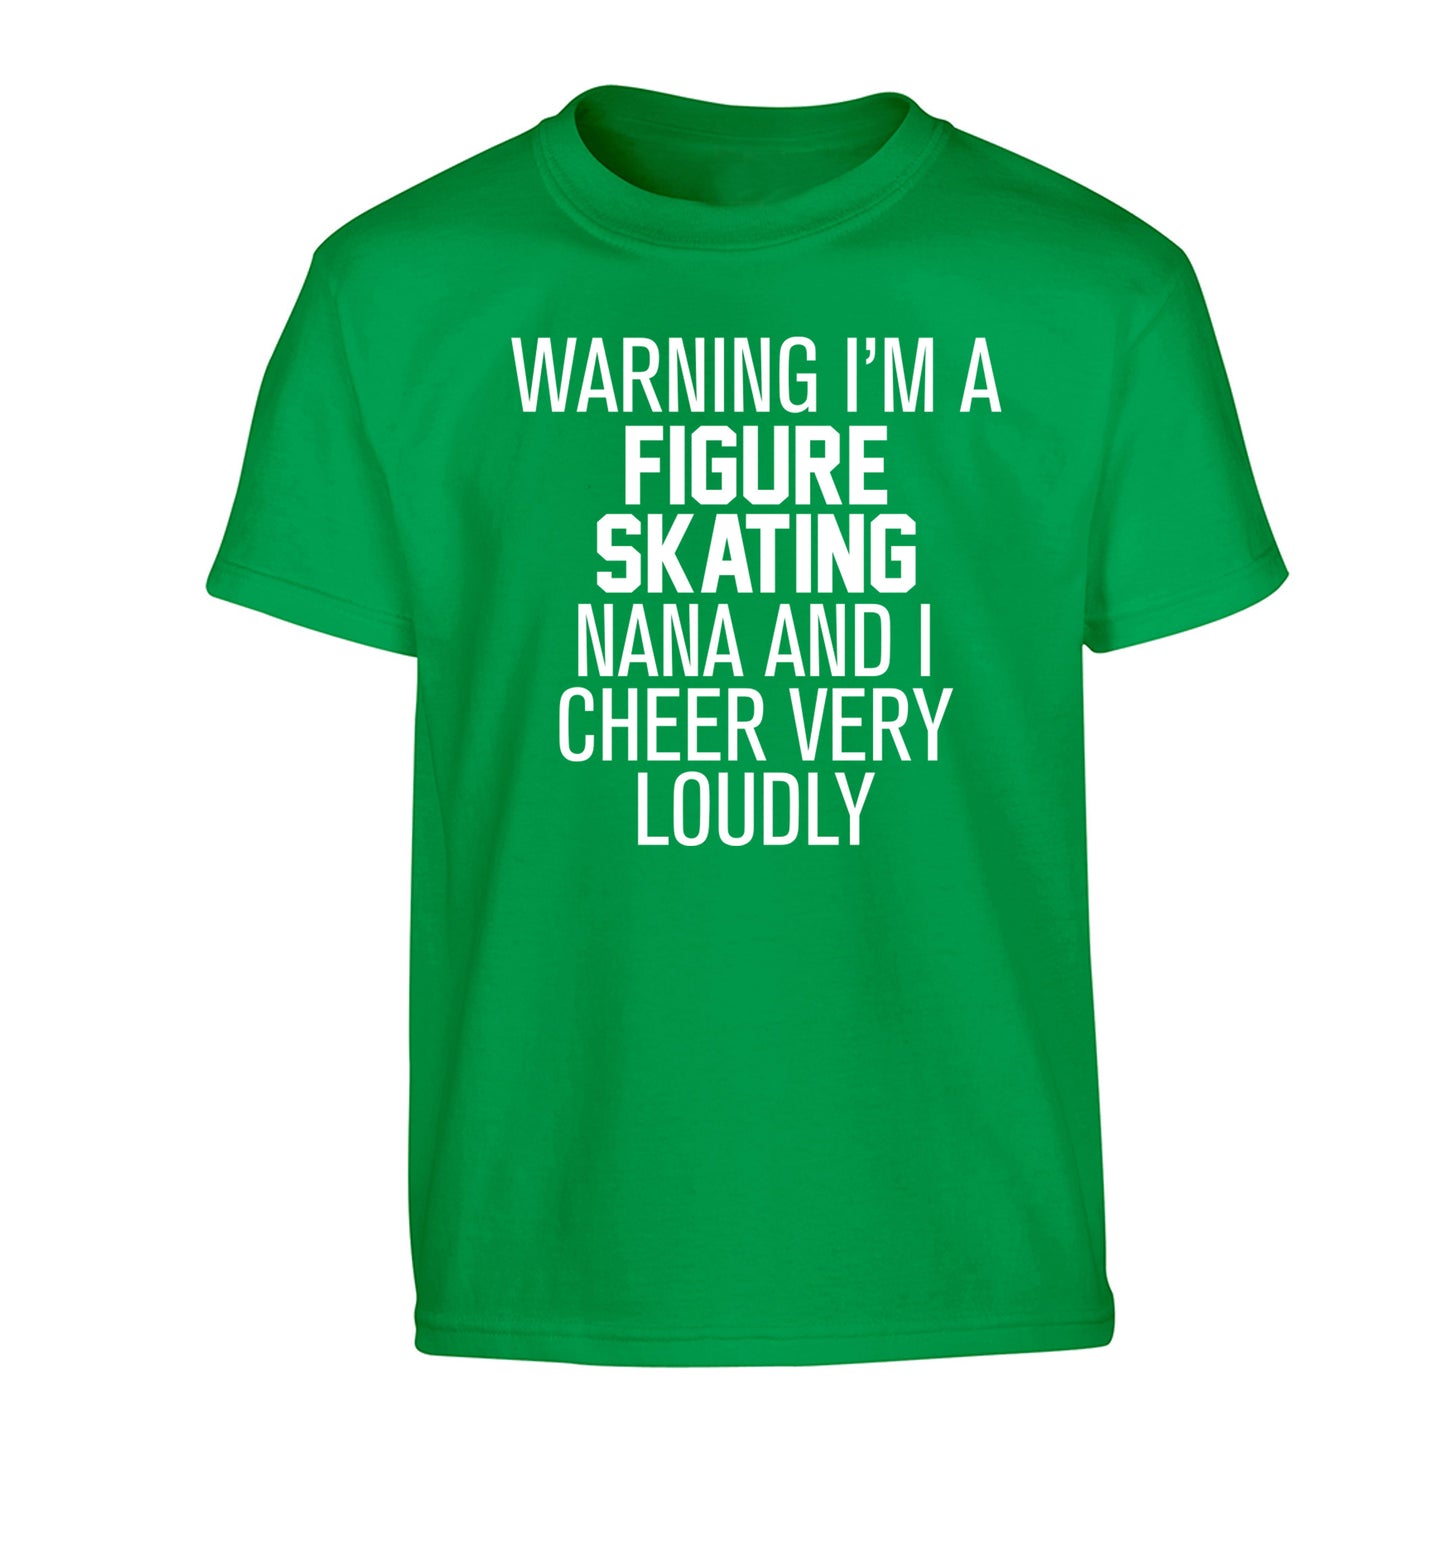 Warning I'm a figure skating nana and I cheer very loudly Children's green Tshirt 12-14 Years